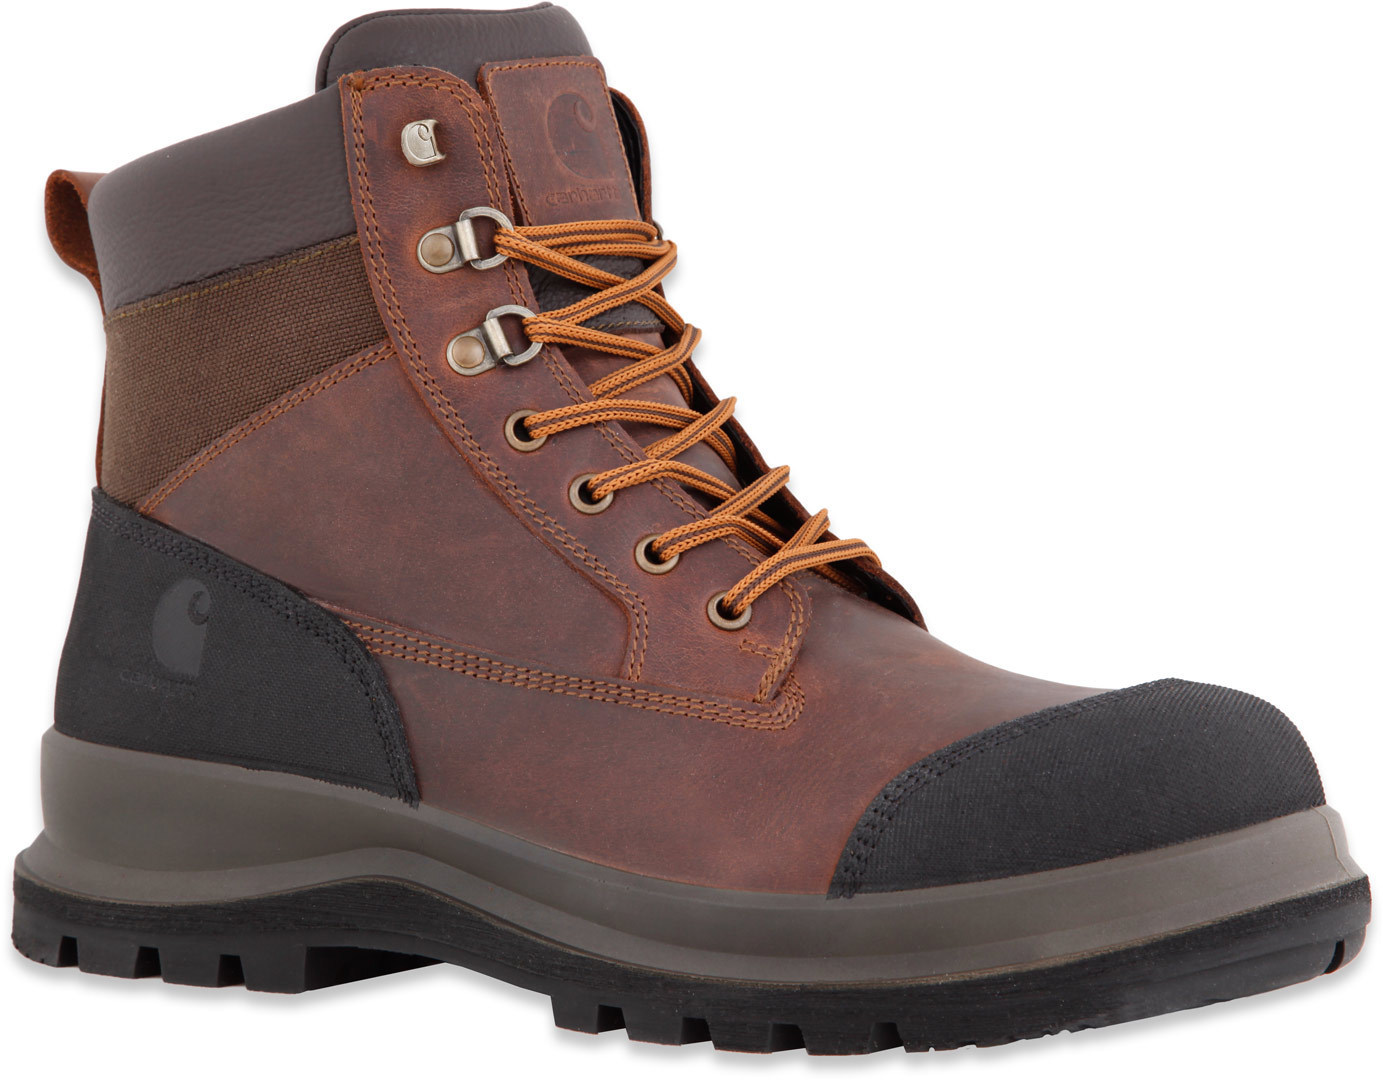 Carhartt Detroit Rugged Flex S3 Mid Boots, brown, Size 39, 39 Brown unisex